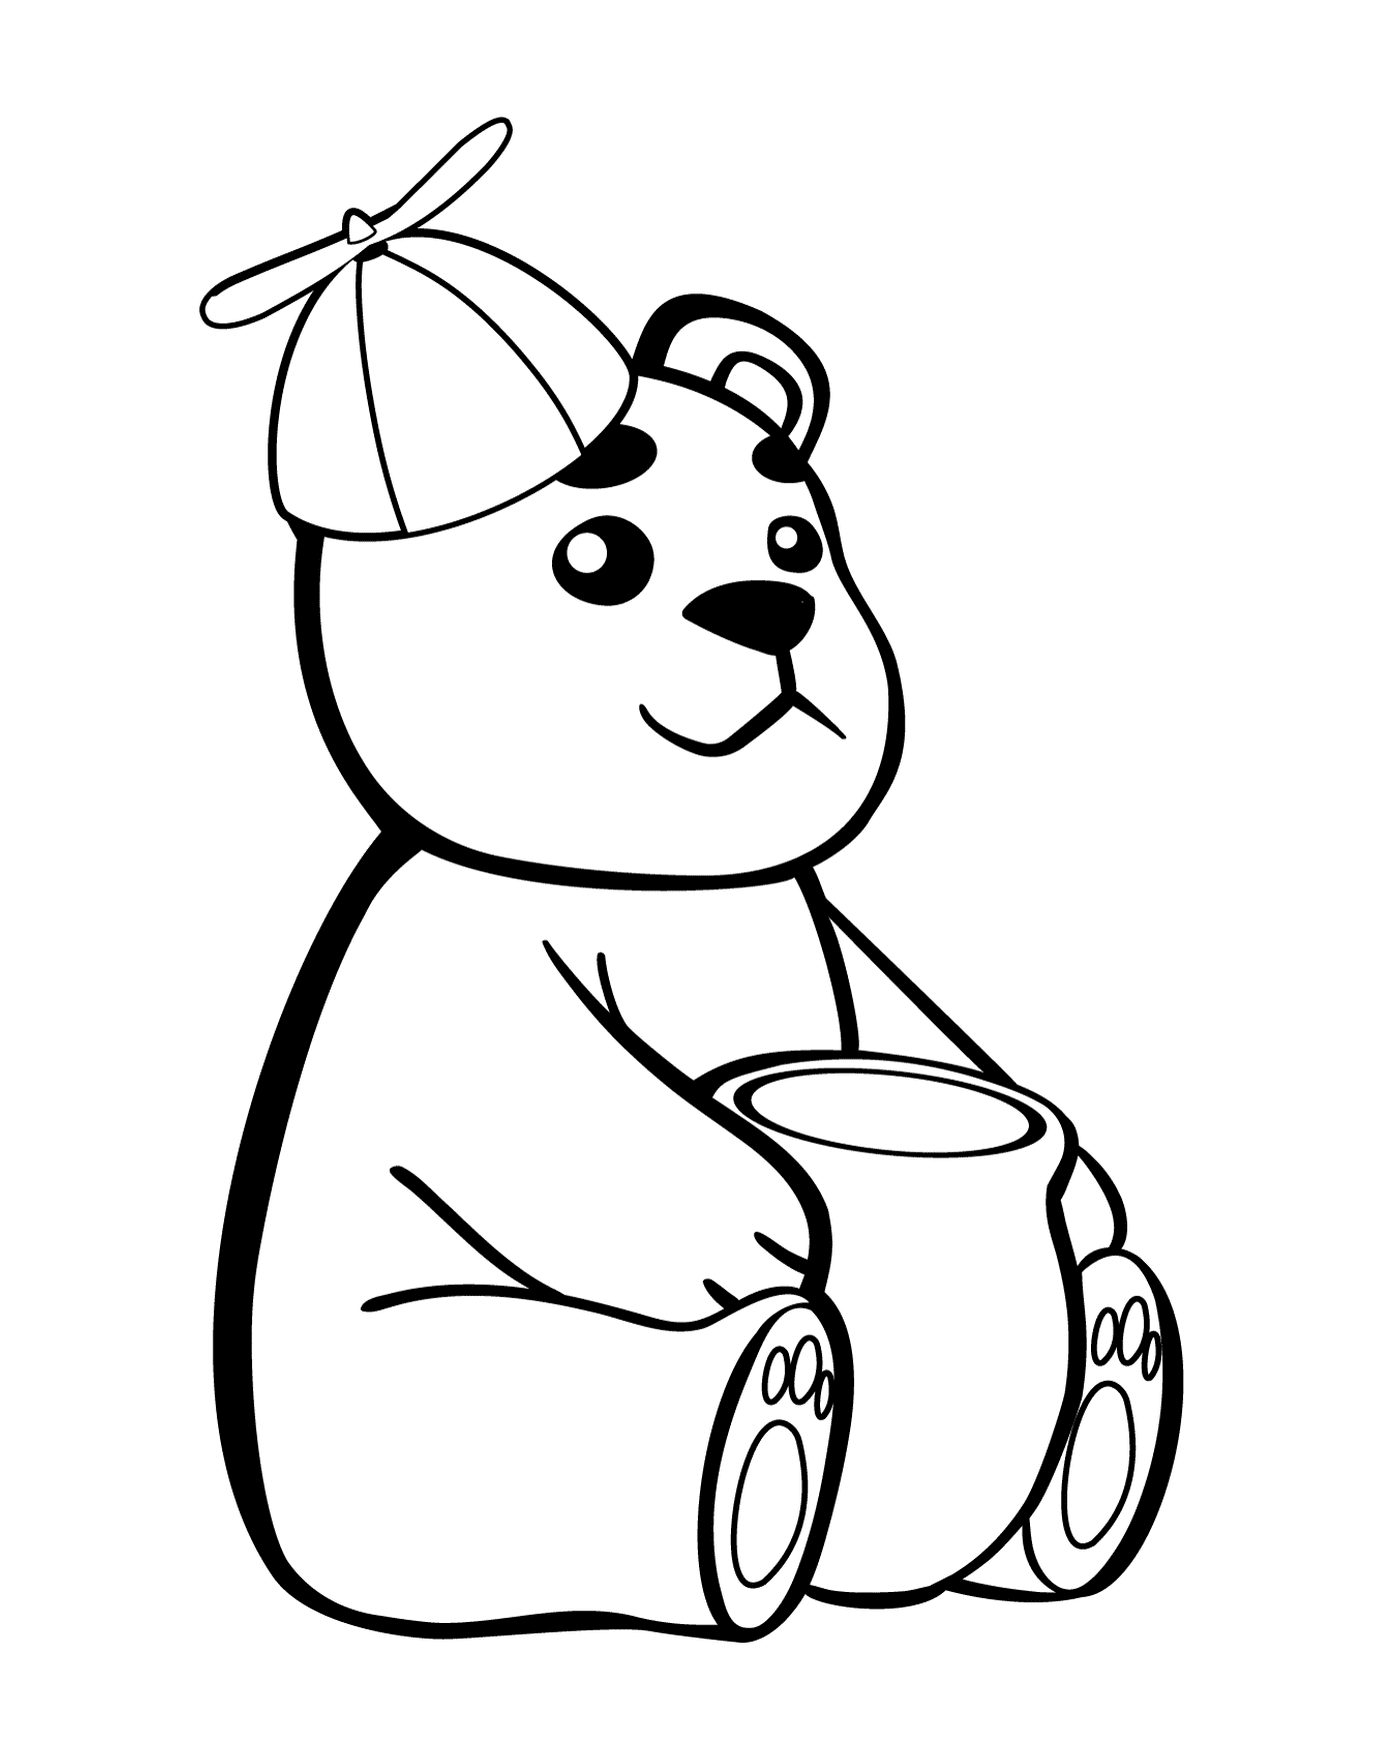  A bear holding a pot of honey 